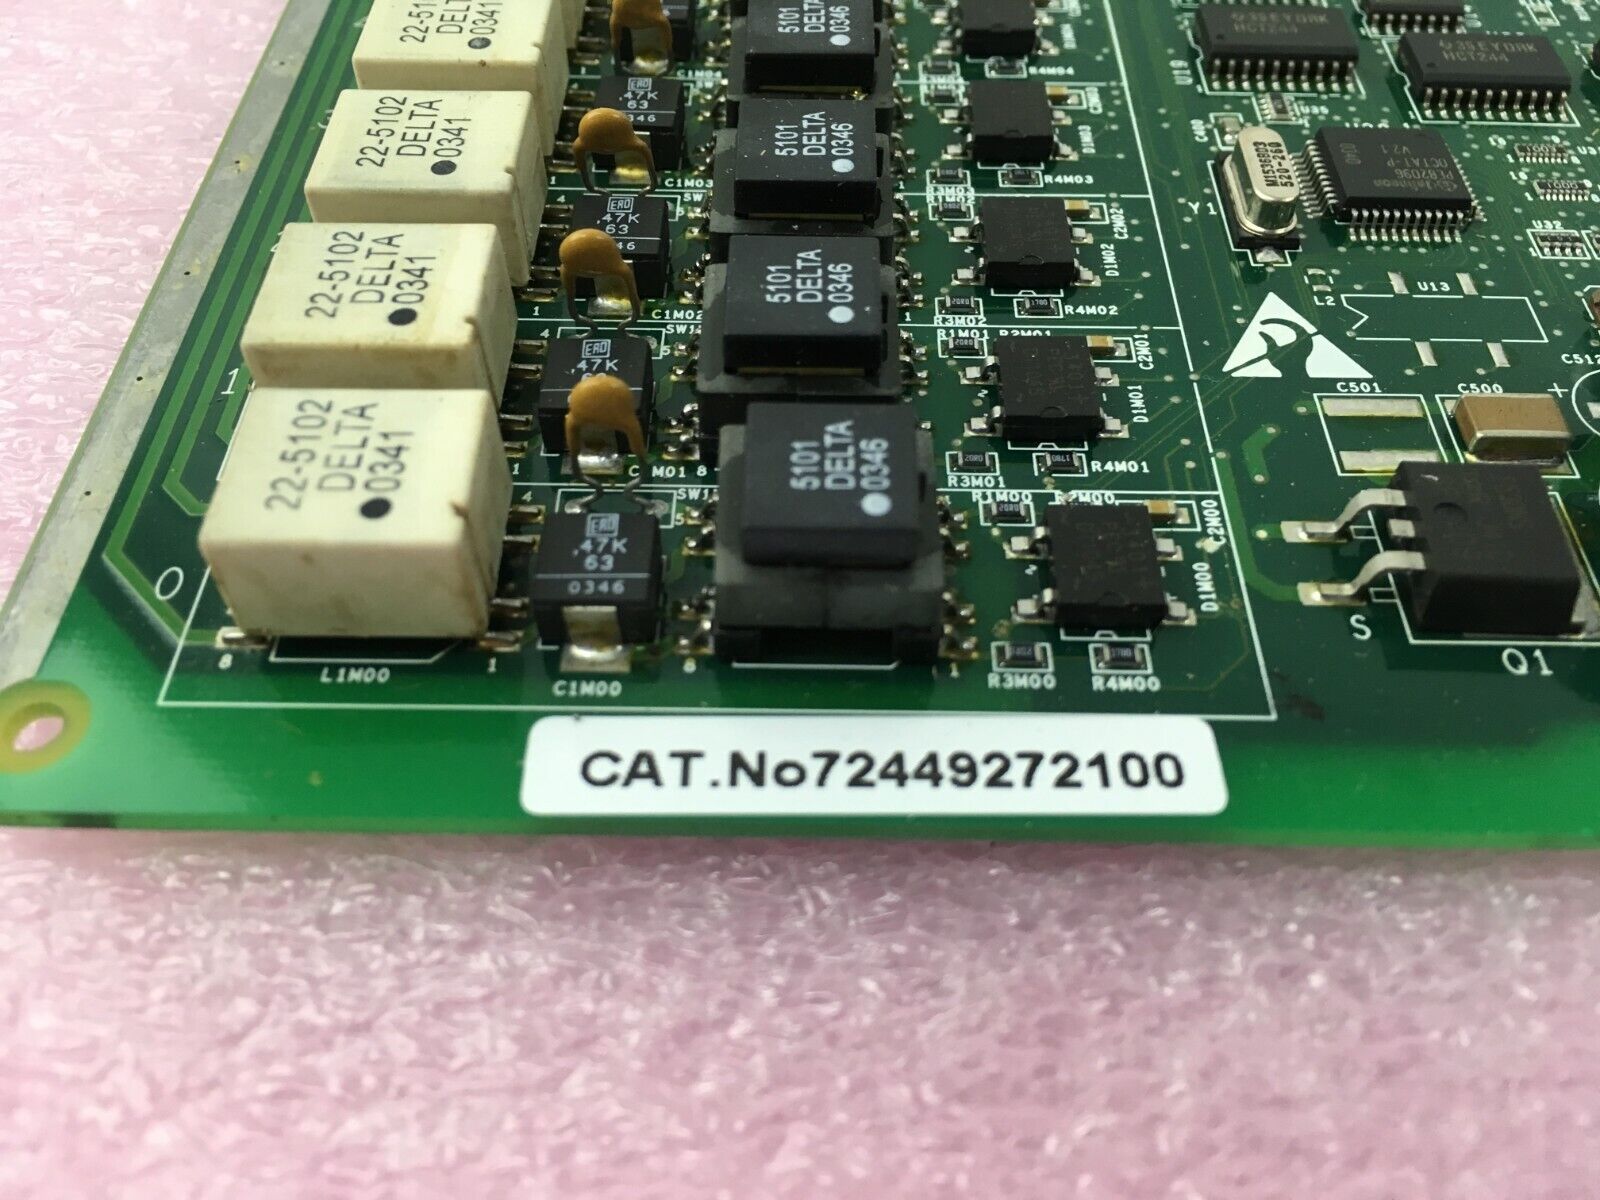 Tadiran Coral IPx 500 16SFT 16 Circuit Flex Set Station Card 72449272100